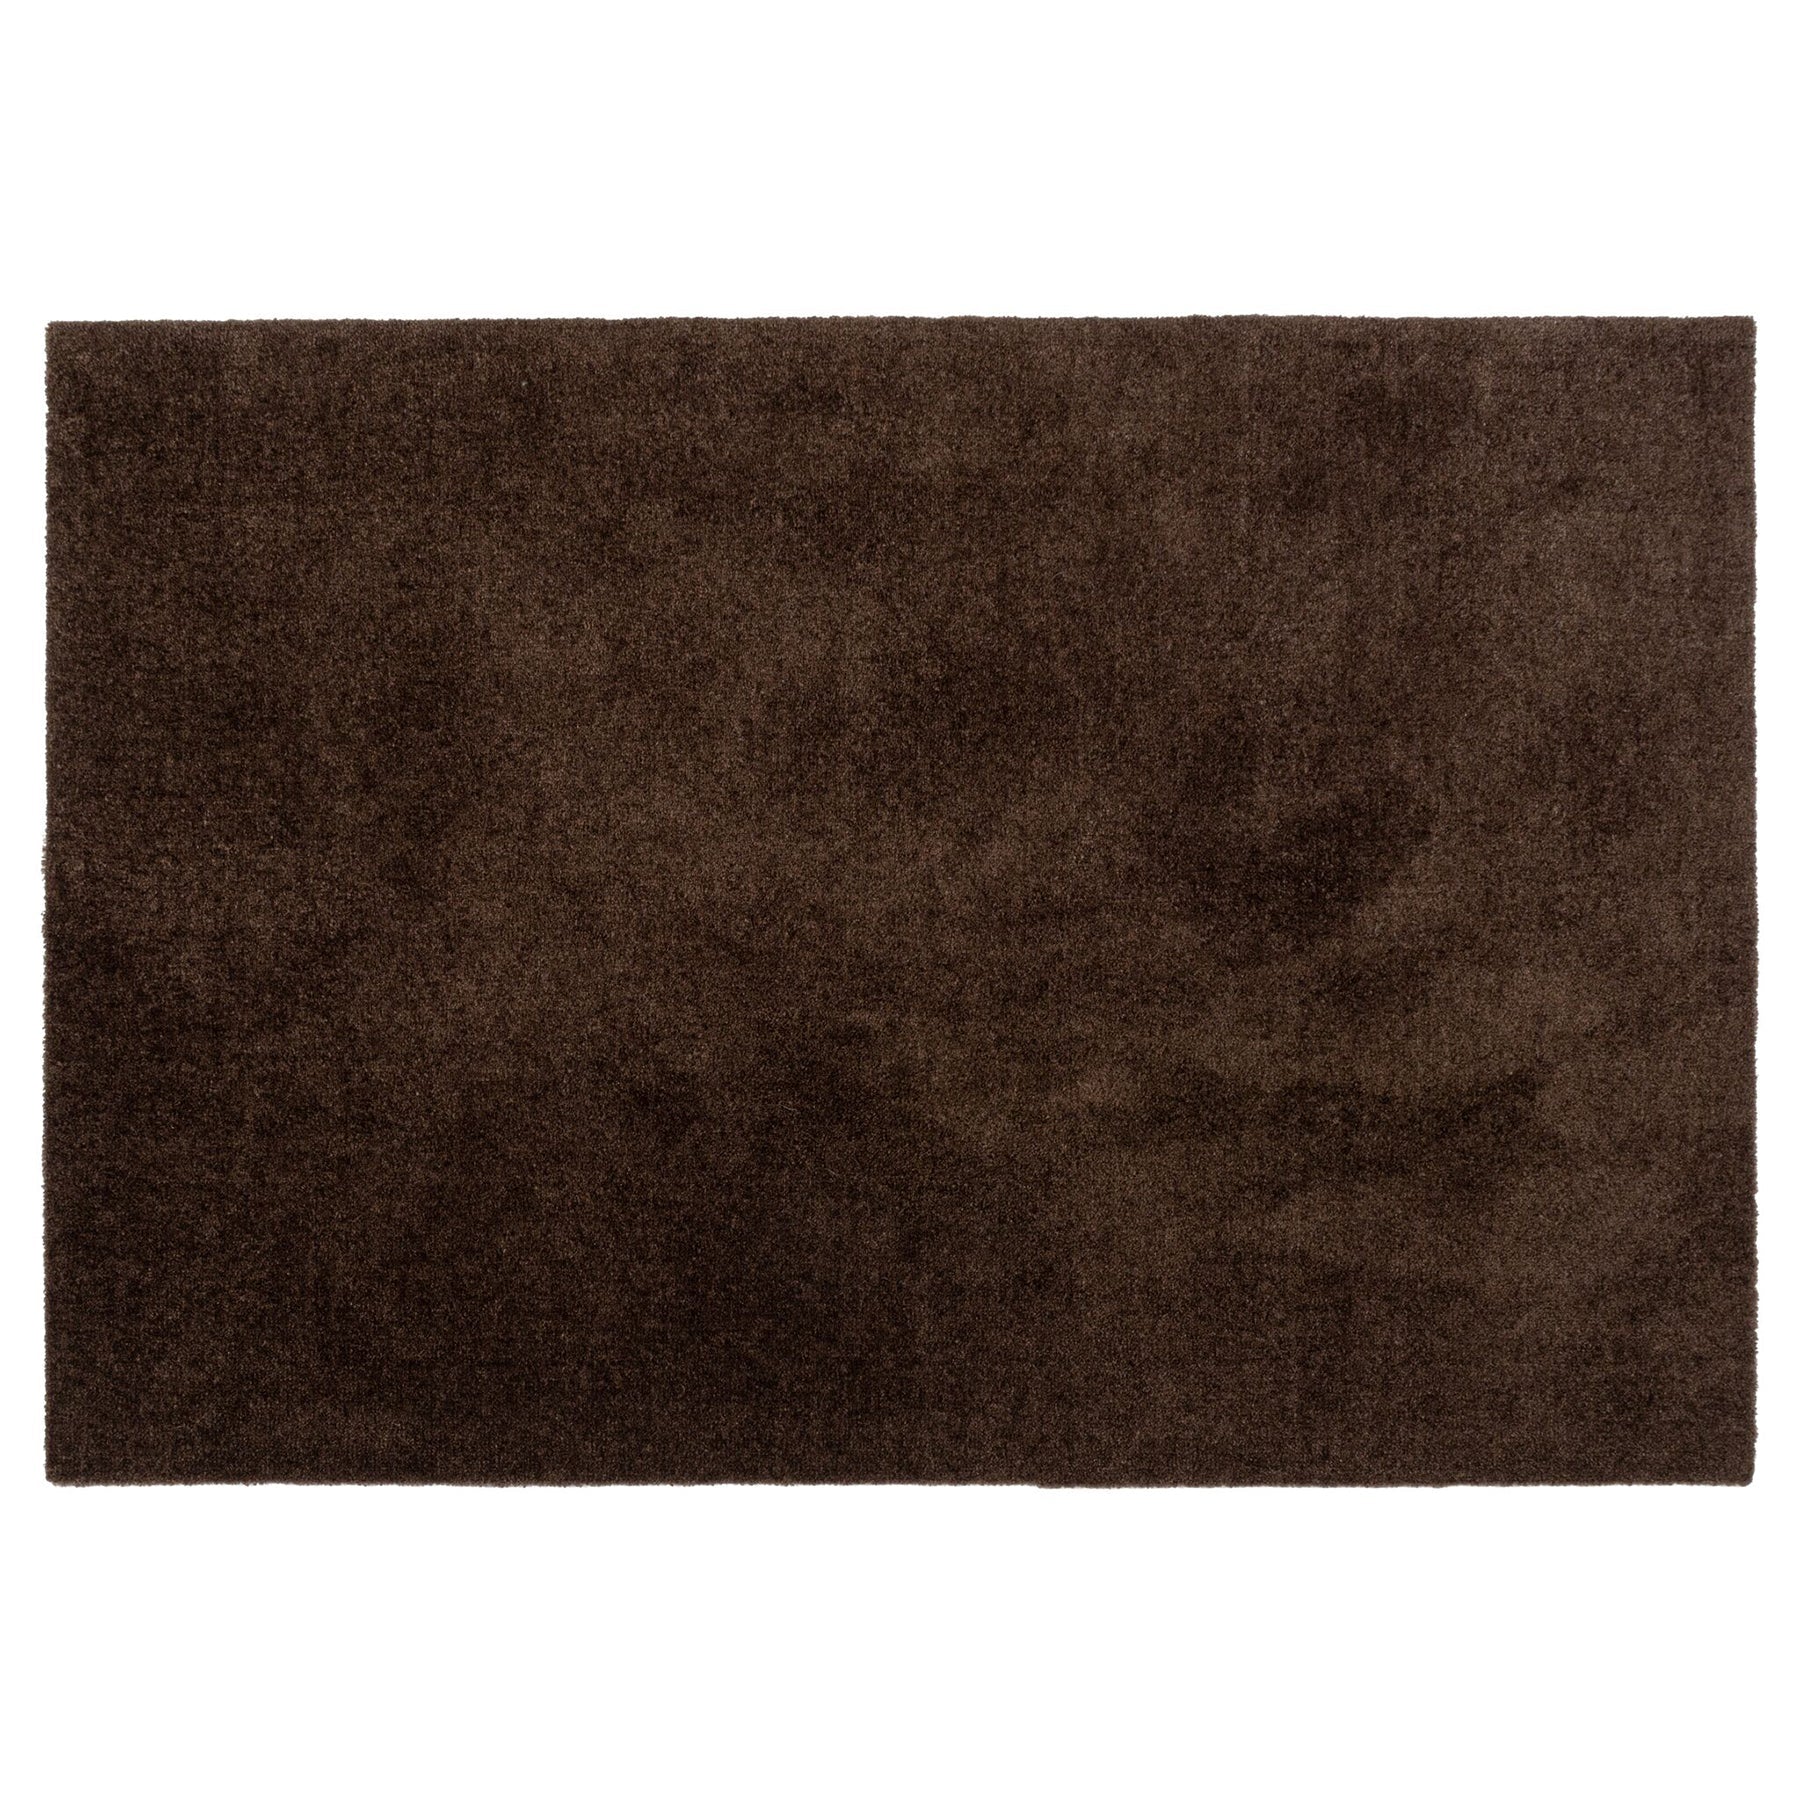 Blanket/tinha 90 x 130 cm - Uni Color/Brown